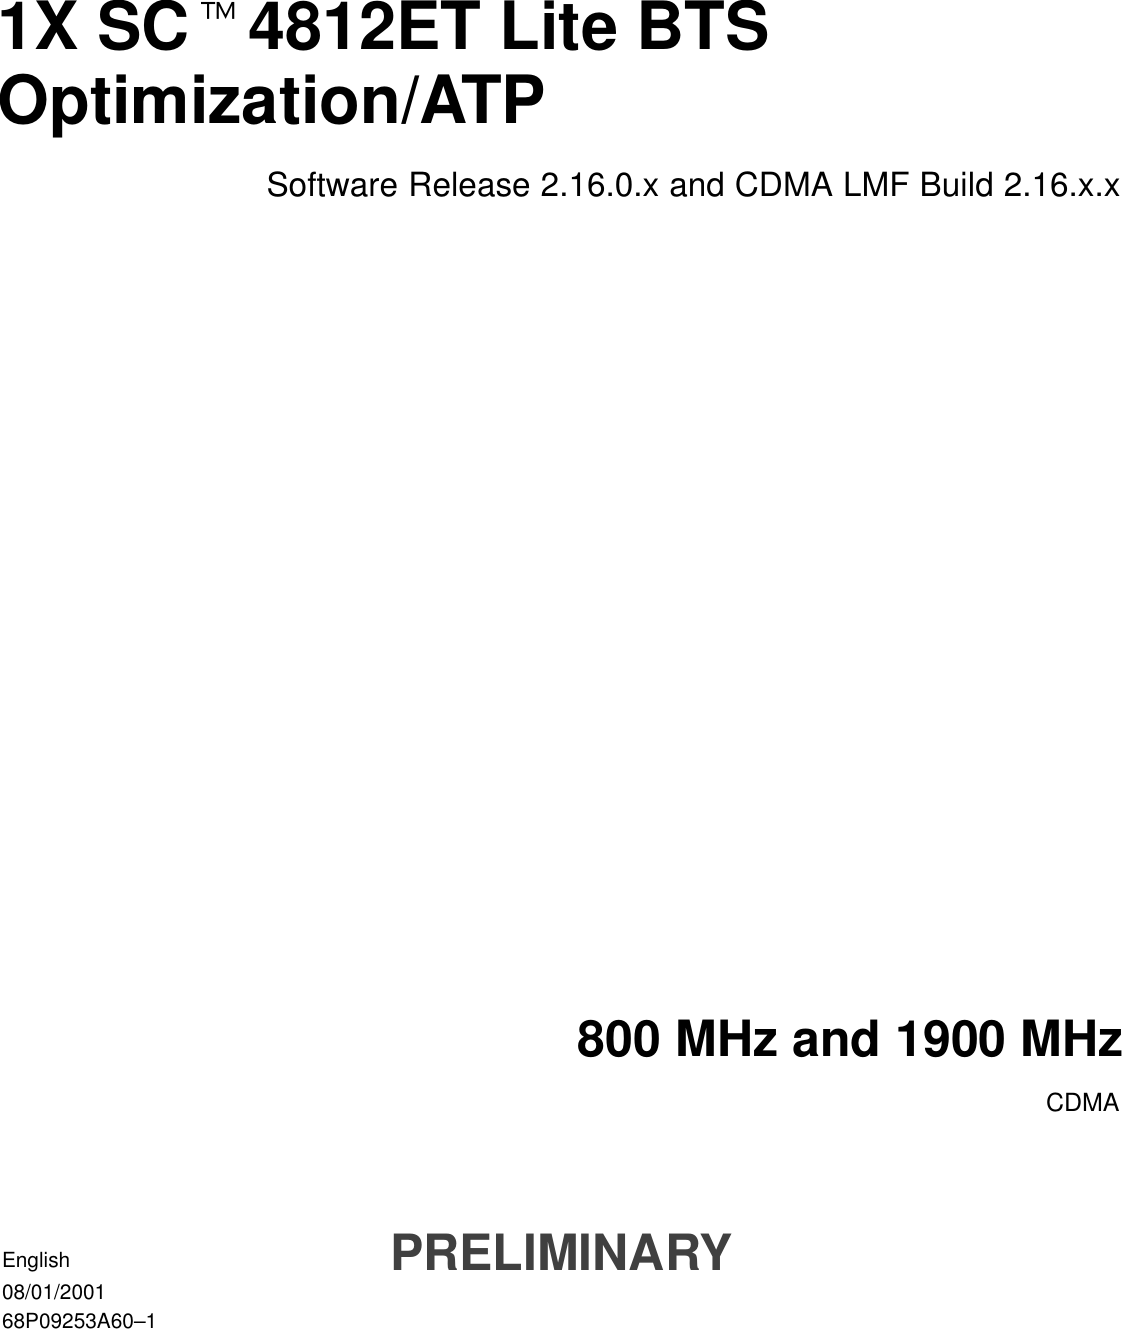 1X SCt4812ET Lite BTSOptimization/ATPSoftware Release 2.16.0.x and CDMA LMF Build 2.16.x.x800 MHz and 1900 MHzCDMAEnglish08/01/200168P09253A60–1PRELIMINARY